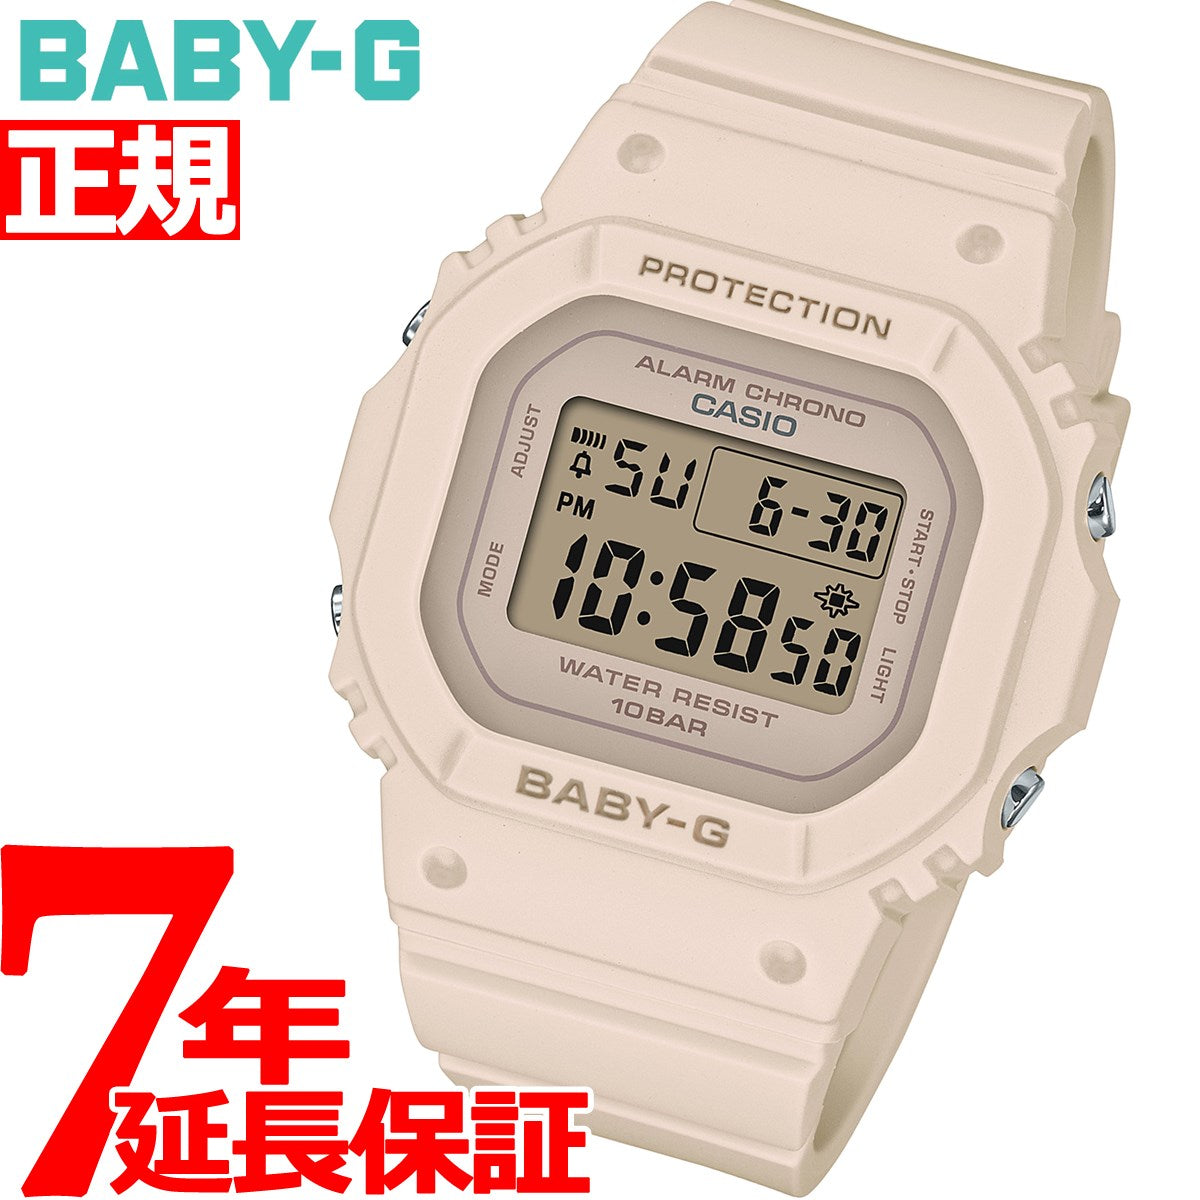 BABY-G カシオ ベビーG レディース 腕時計 デジタル BGD-565-4JF ピンクベージュ – neel selectshop